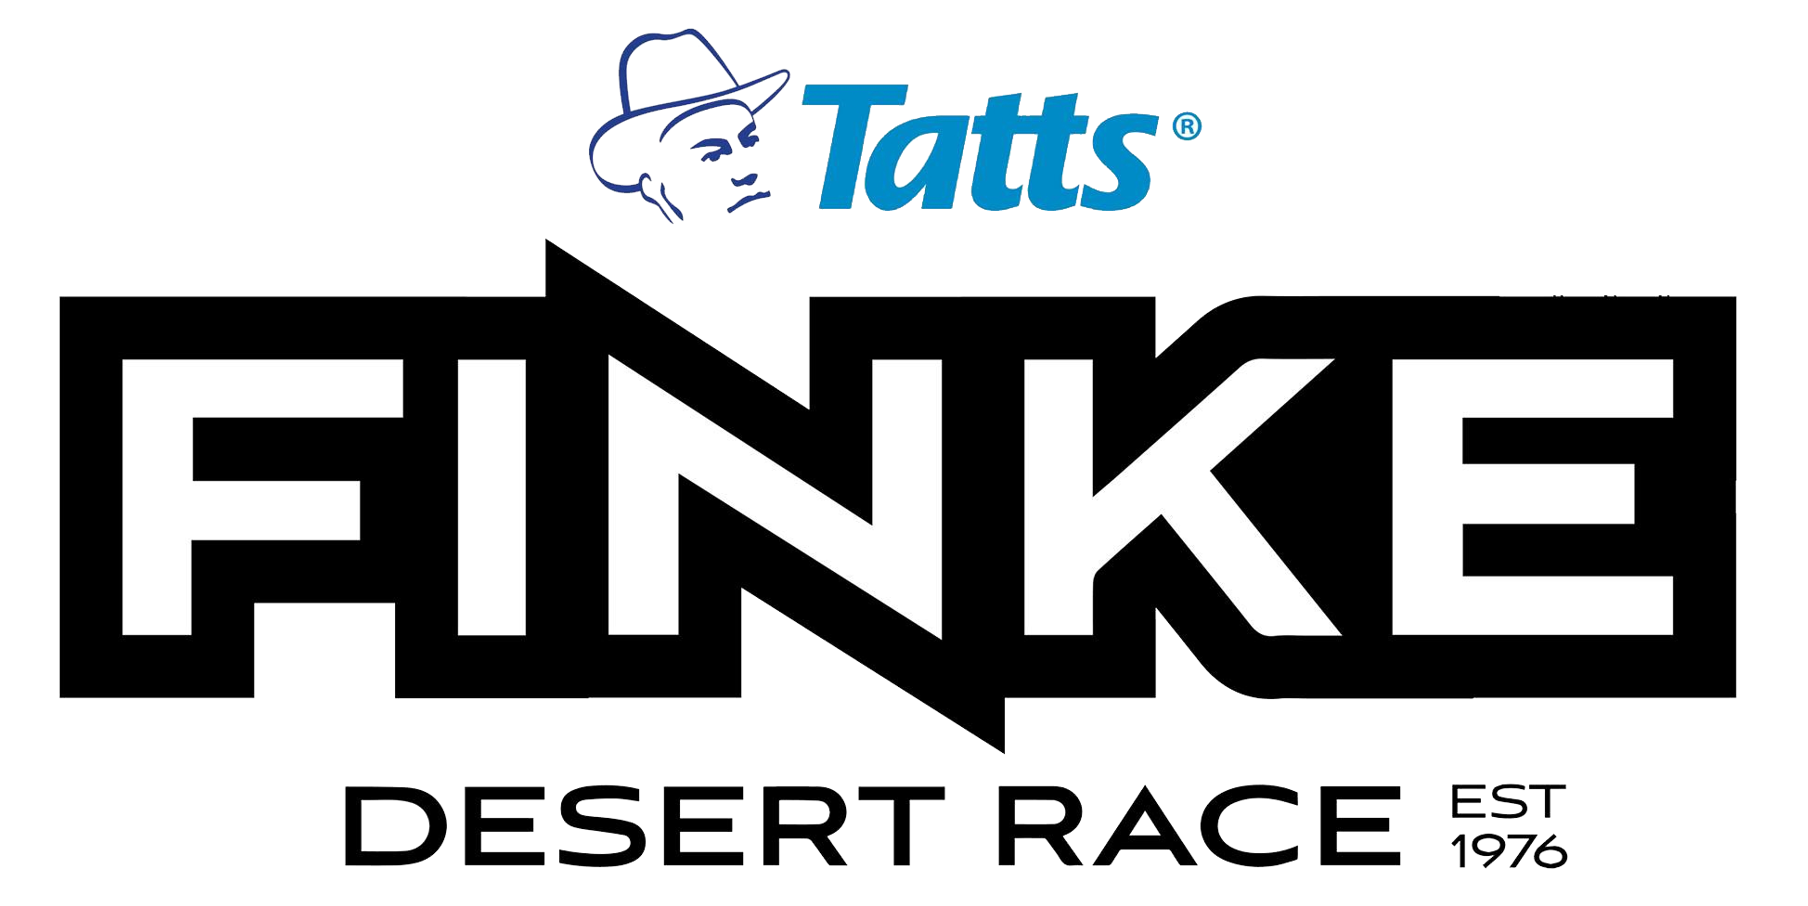 Tatts Finke Desert Race 2023: Update - Motorsport Australia Statement